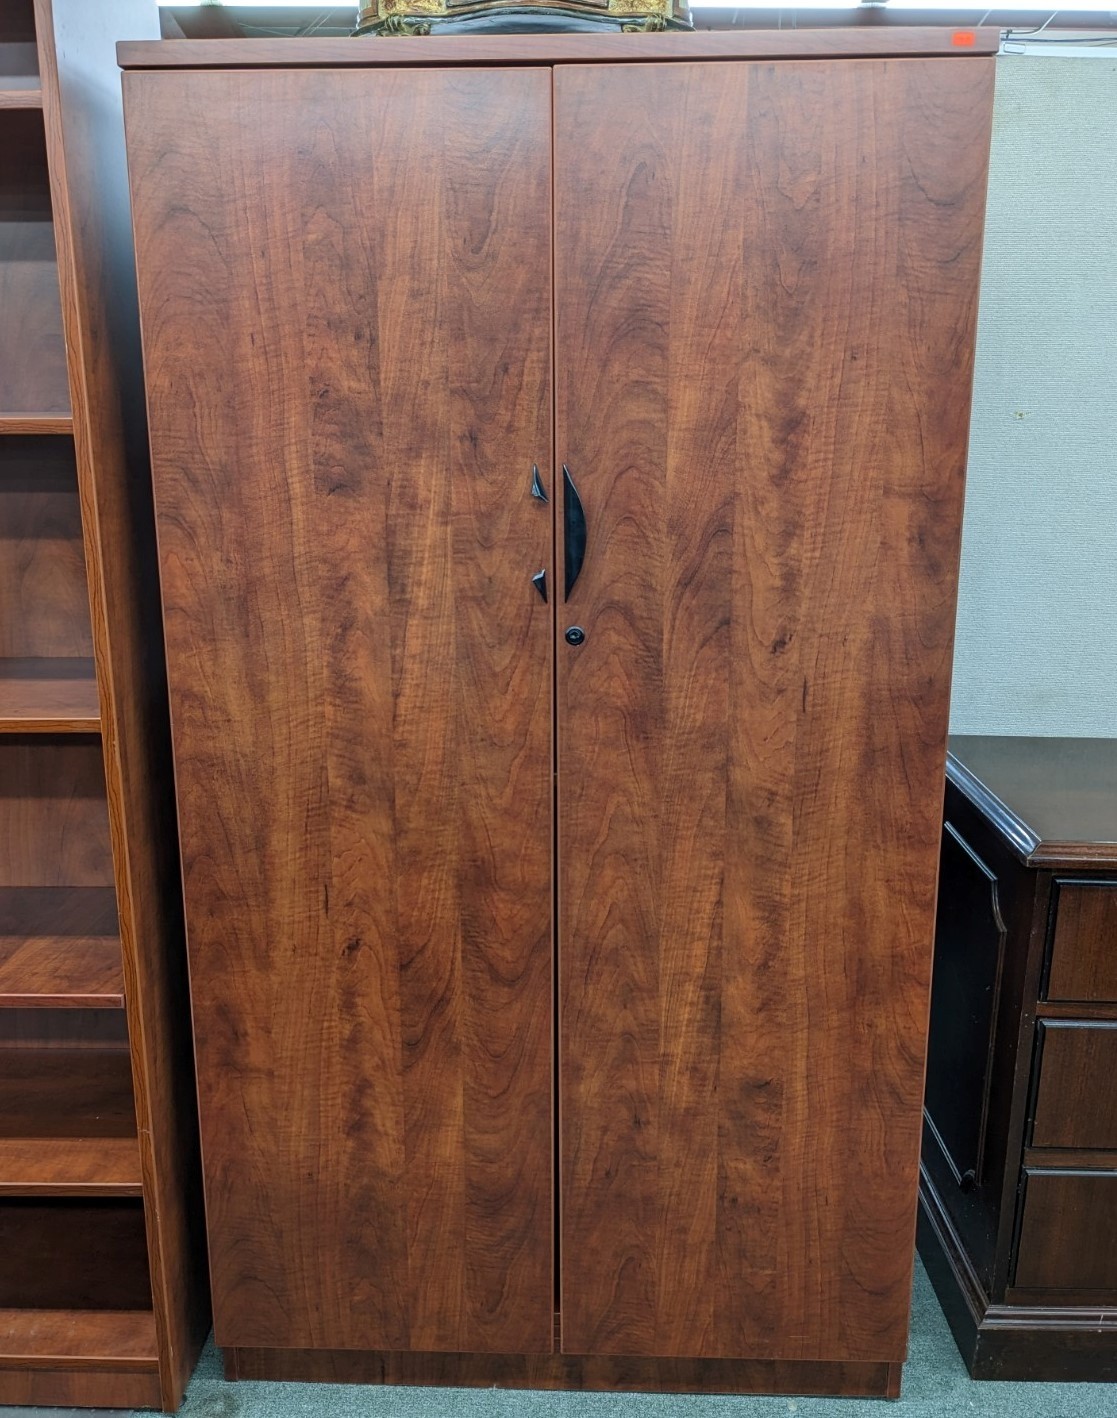 Used Woodgrain Laminate Storage Cabinet